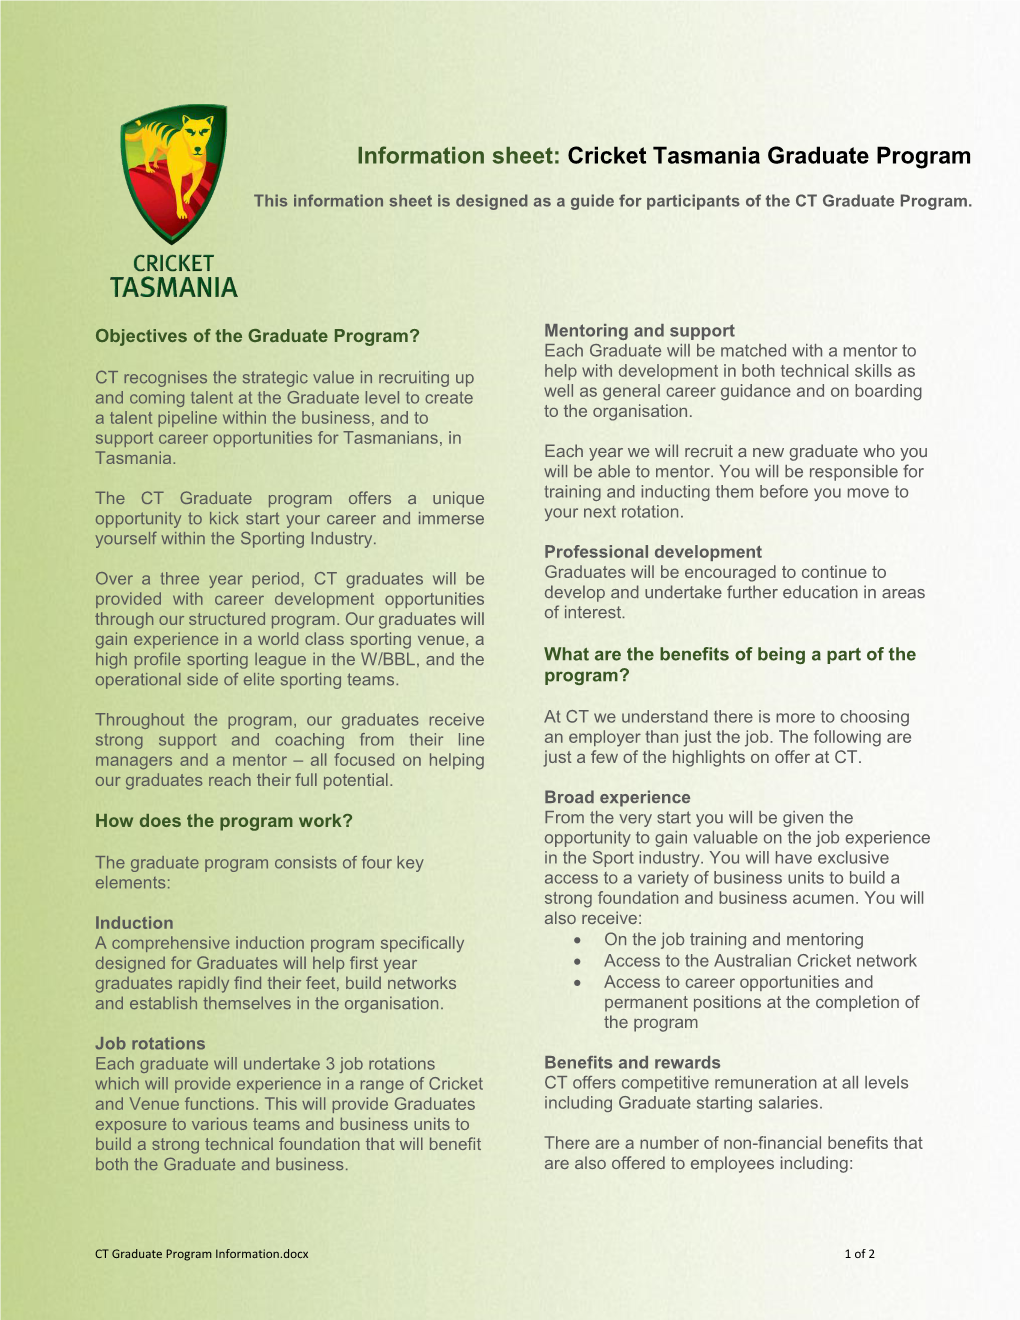 Information Sheet: Cricket Tasmania Graduate Program